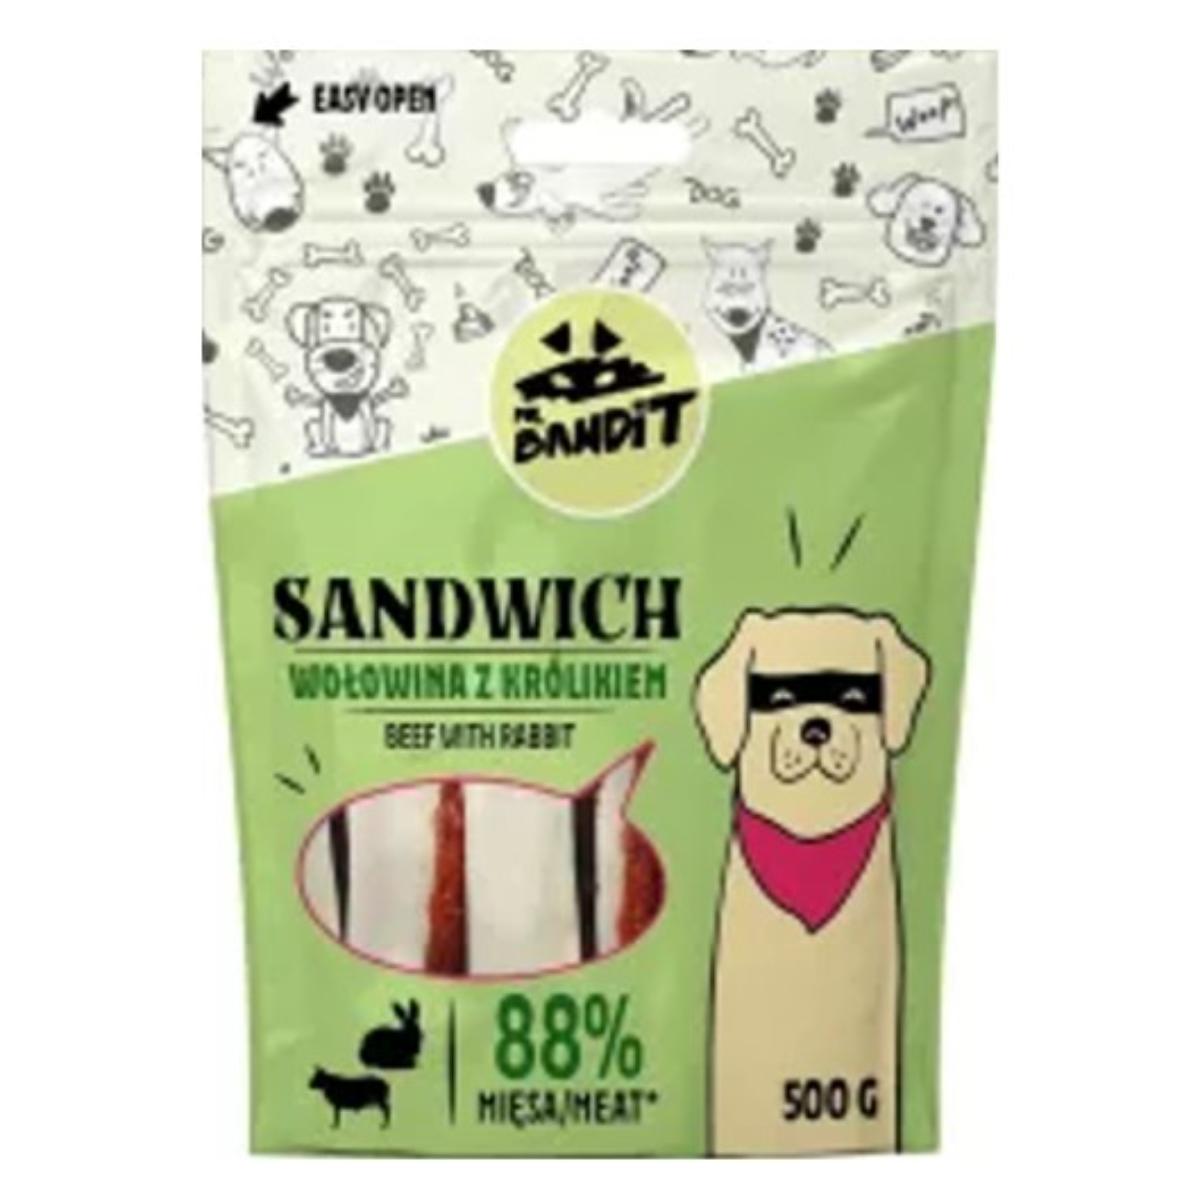 MR BANDIT Sandwich, XS-XL, Vită și Iepure, punguță recompense câini, 500g